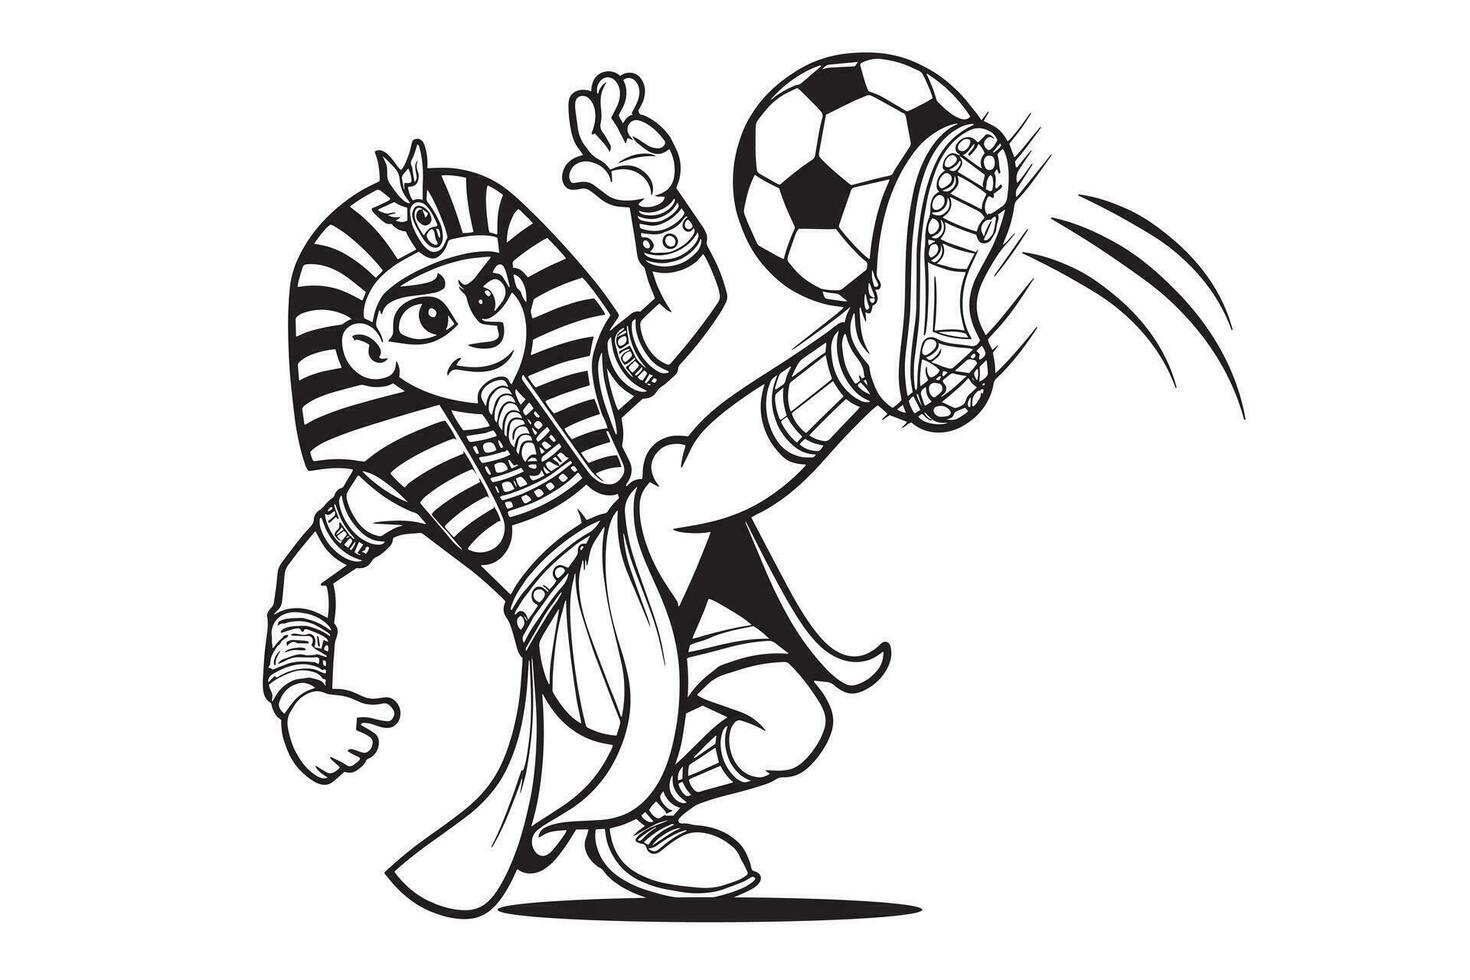 Egyptische faraonische koning mascotte tekenfilm karakter spelen Amerikaans voetbal voetbal Afrika inhoud team vector kunst grappig tekening2